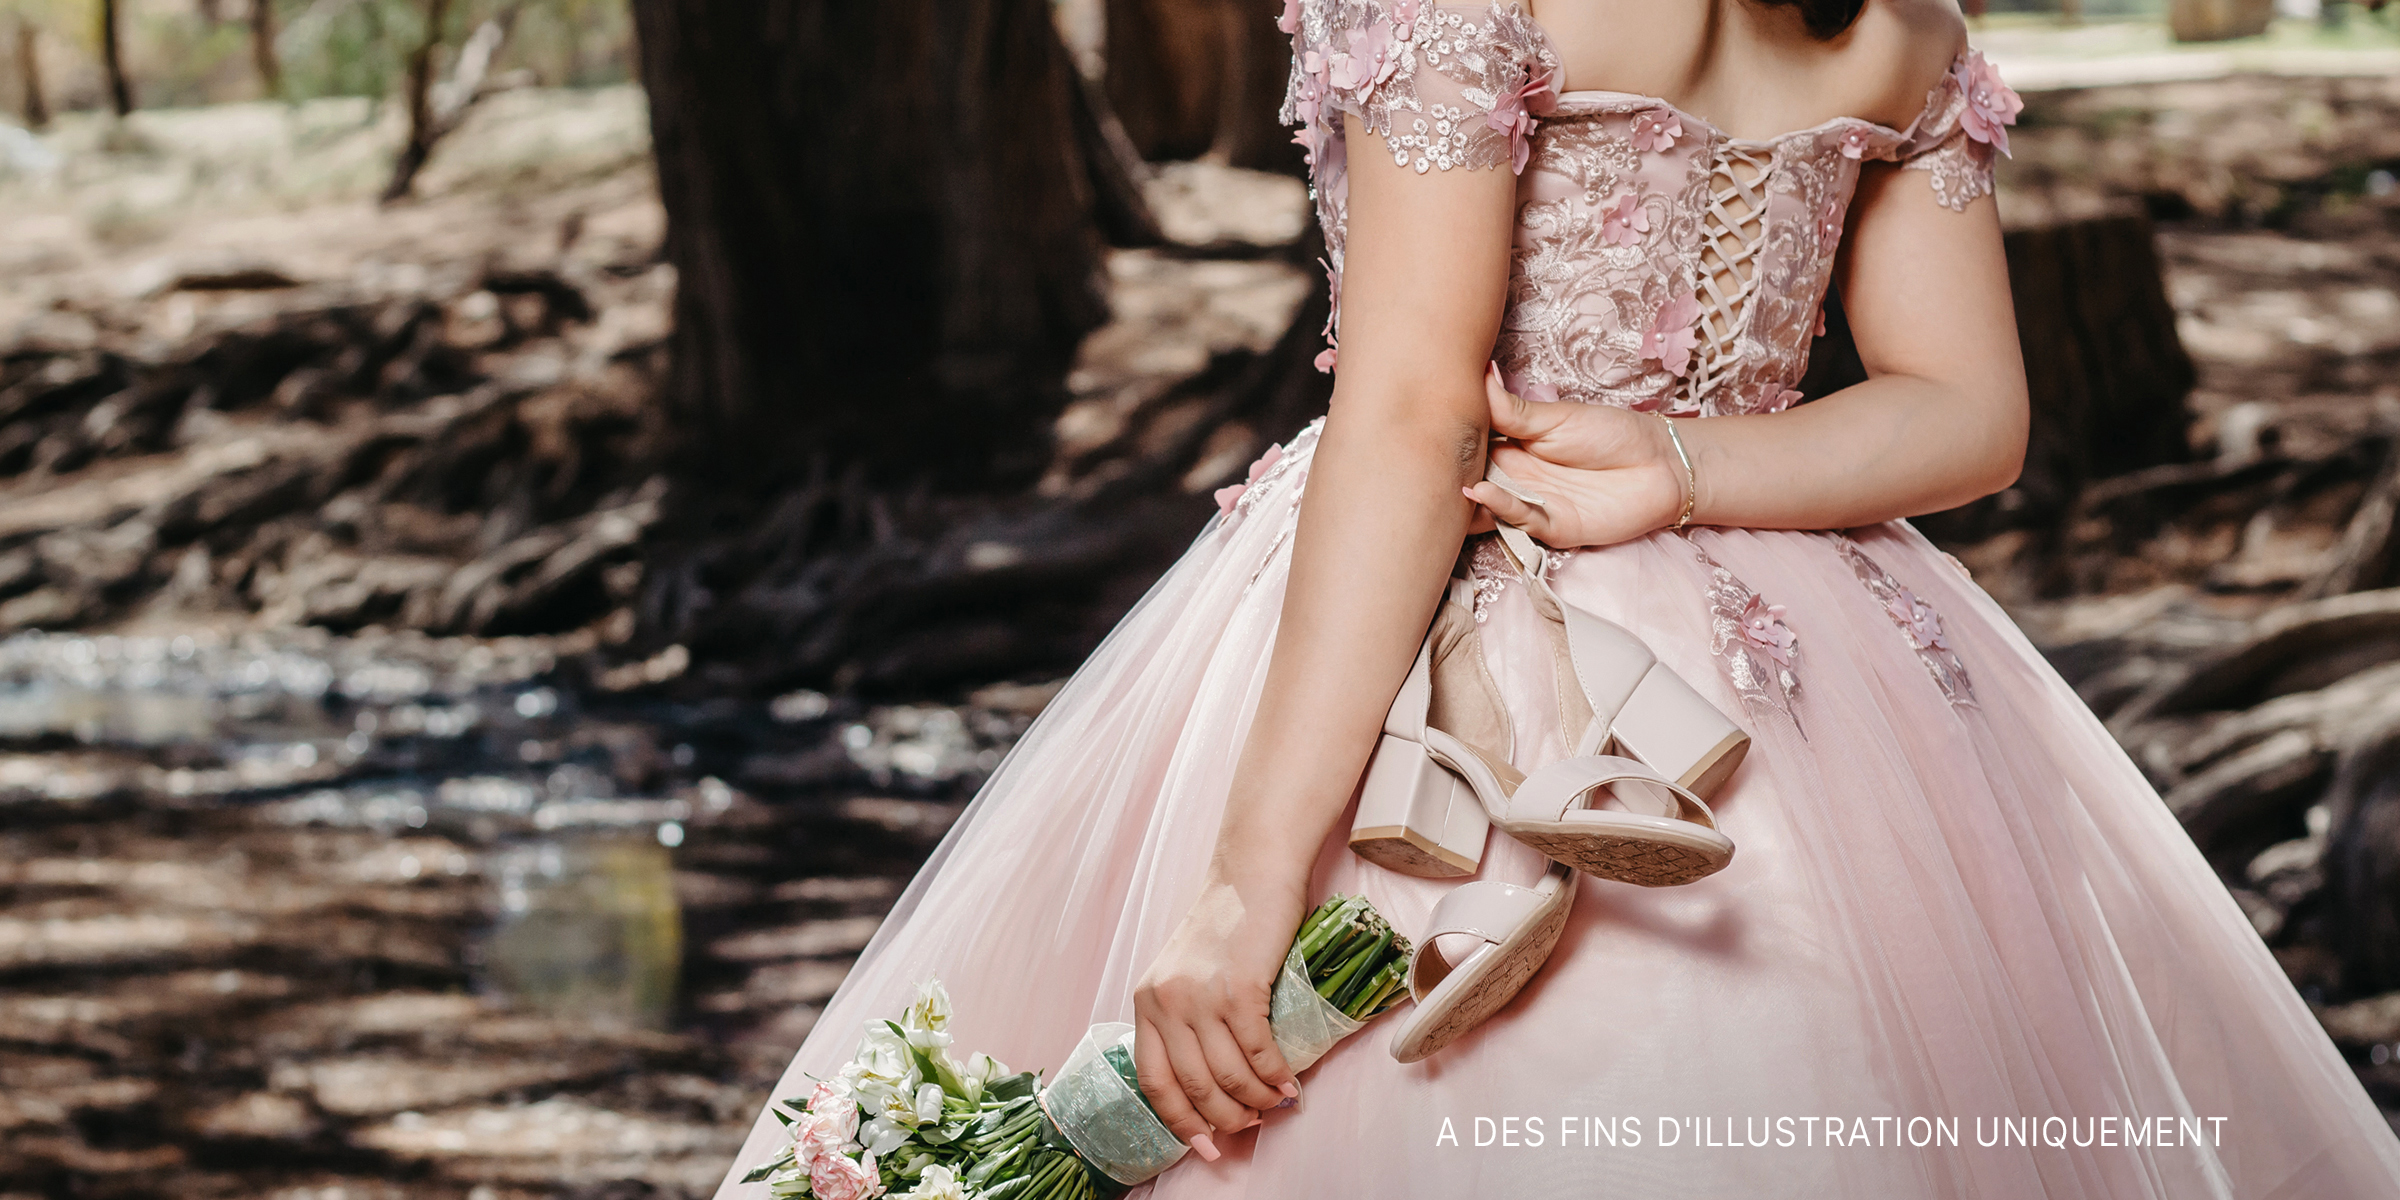 Fille dans une jolie robe | Source : Shutterstock